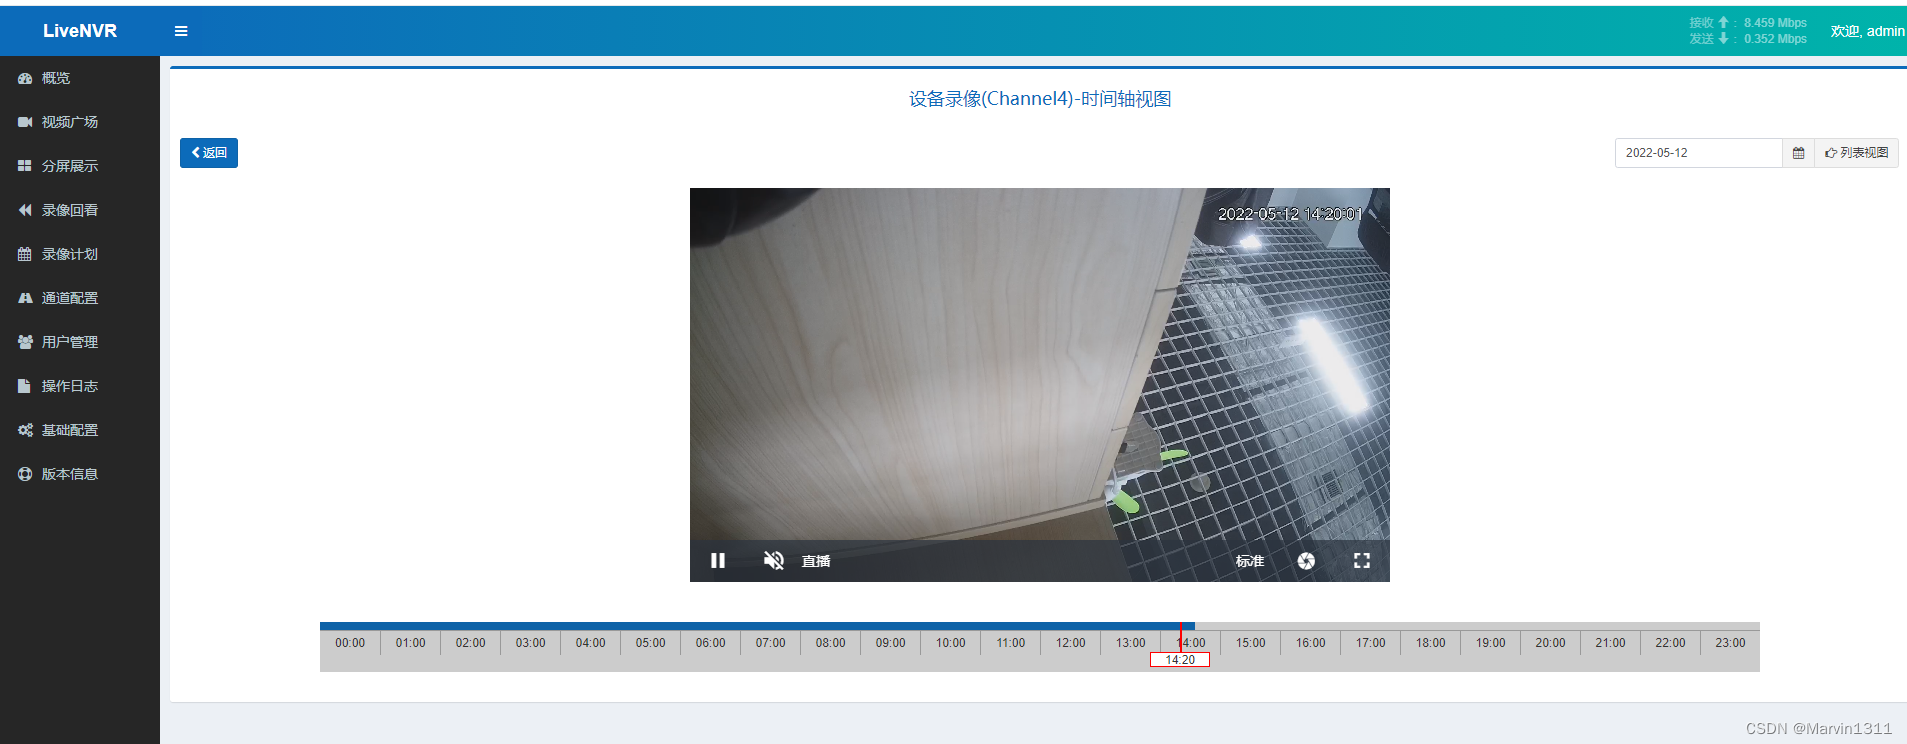 LiveNVR监控流媒体Onvif/RTSP功能-支持海康摄像头通过海康SDK接入支持回看倍速播放海康设备存储的设备录像_Onvif海康SDK_03